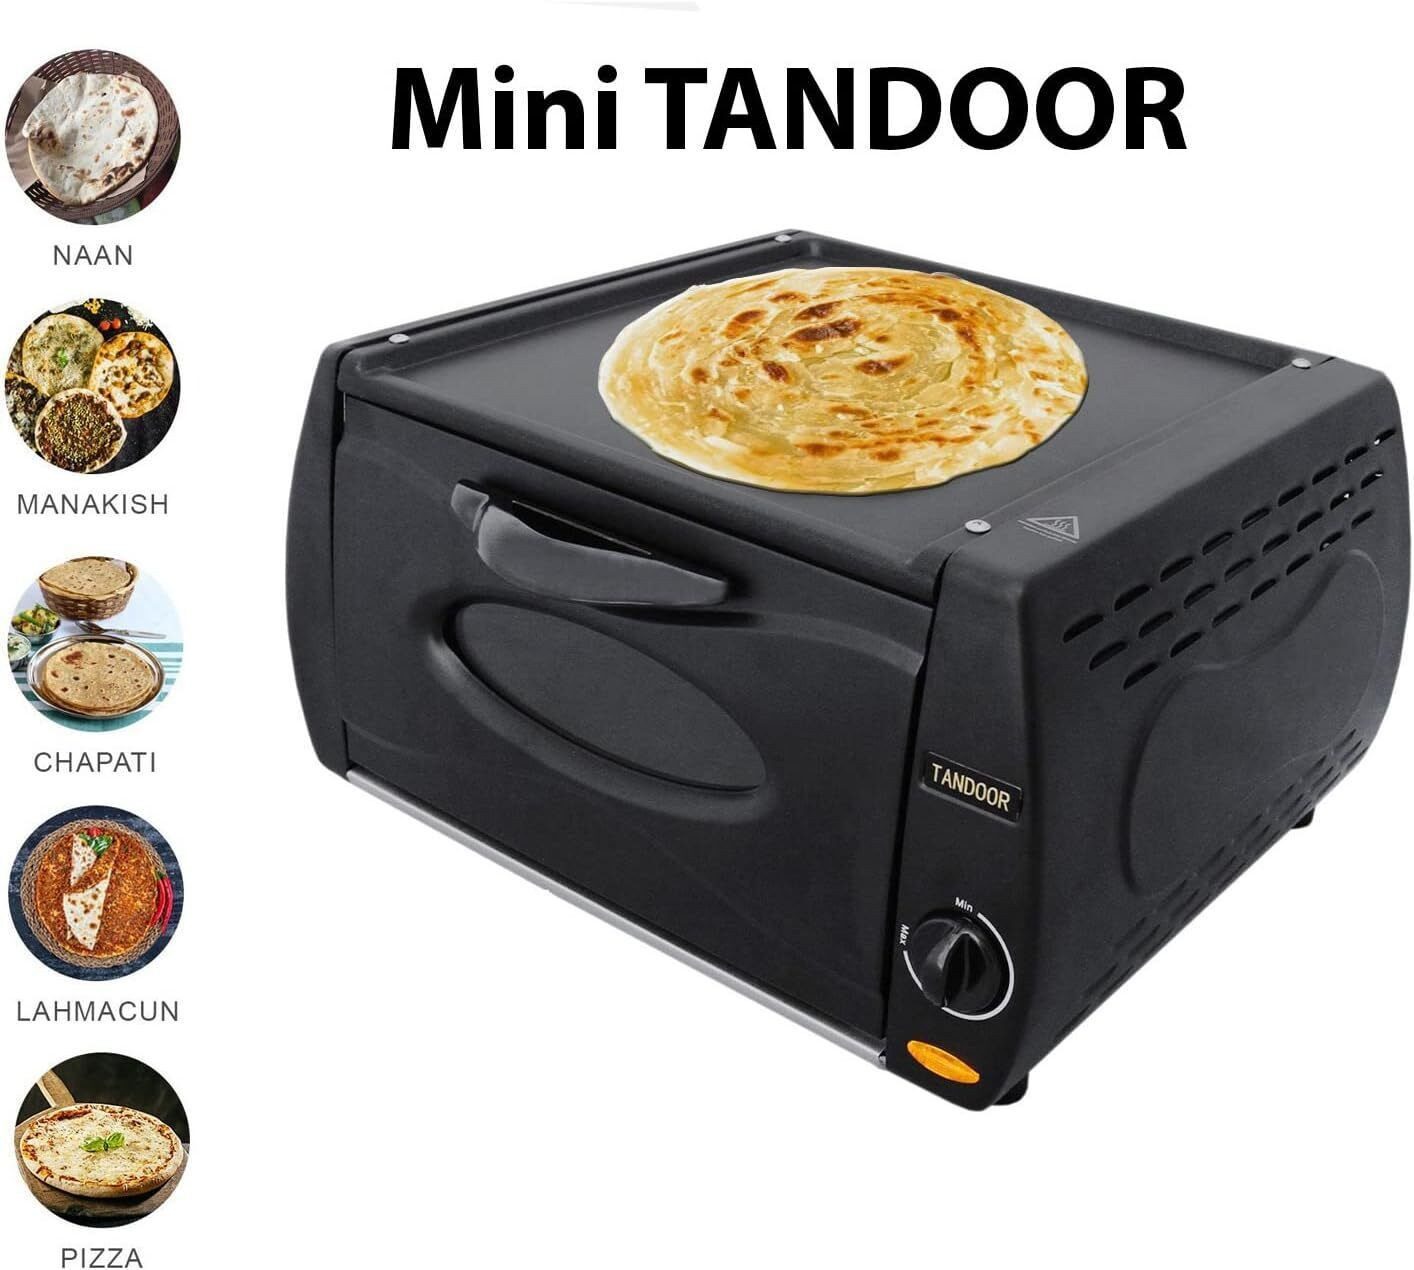 Tandoor Minibackofen Tandoor Mini Backofen Ofen Maker Pizza Lahmacun Naan Chapati Grill